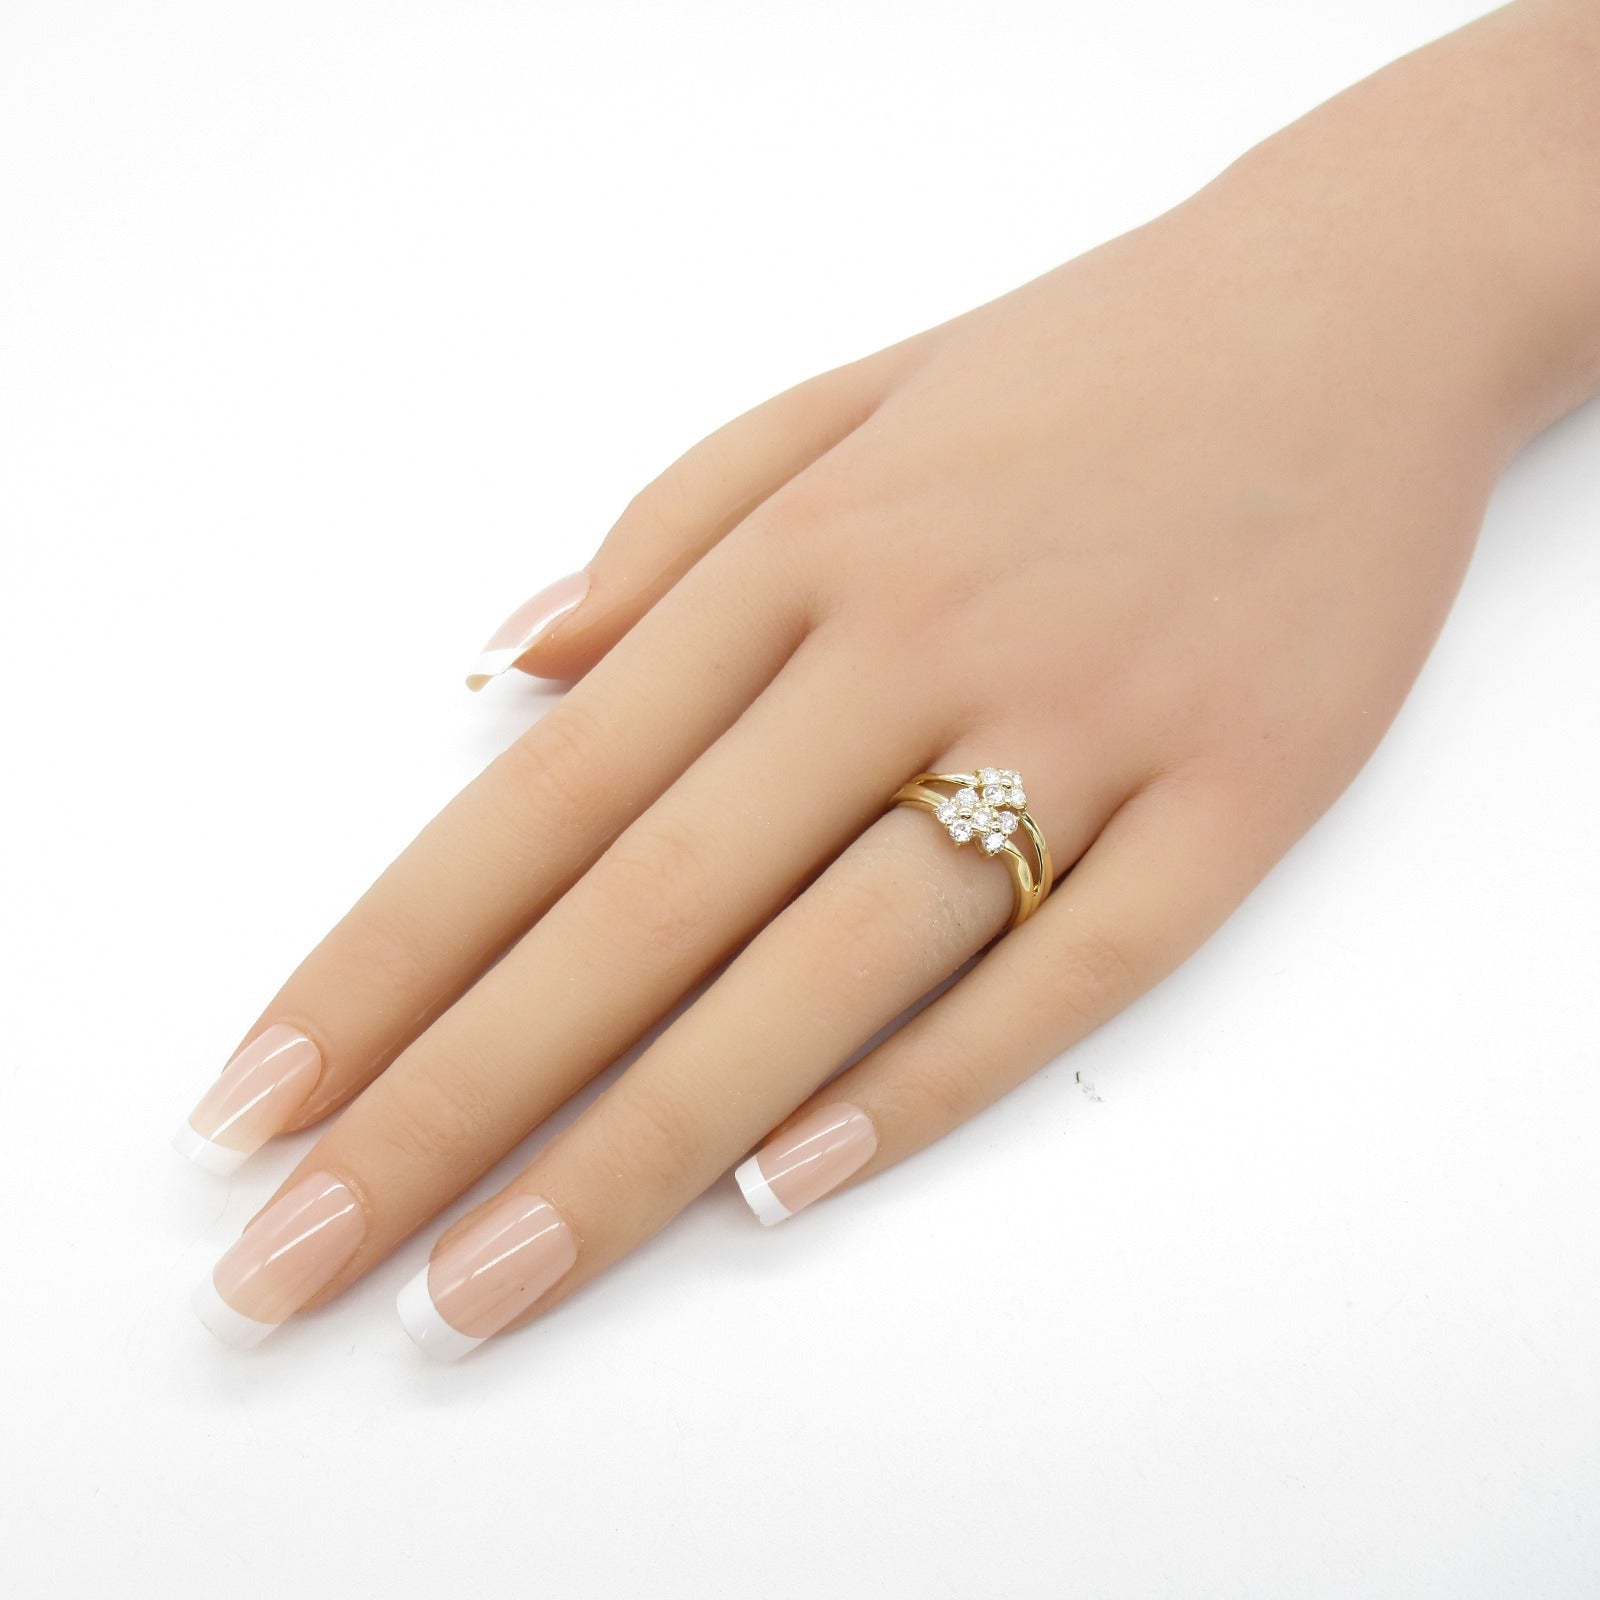 Jewelry Jewelry Diamond Ring Ring Ring Ring Jewelry K18 (yellow g) Diamond  Clear Diamond 3.7g